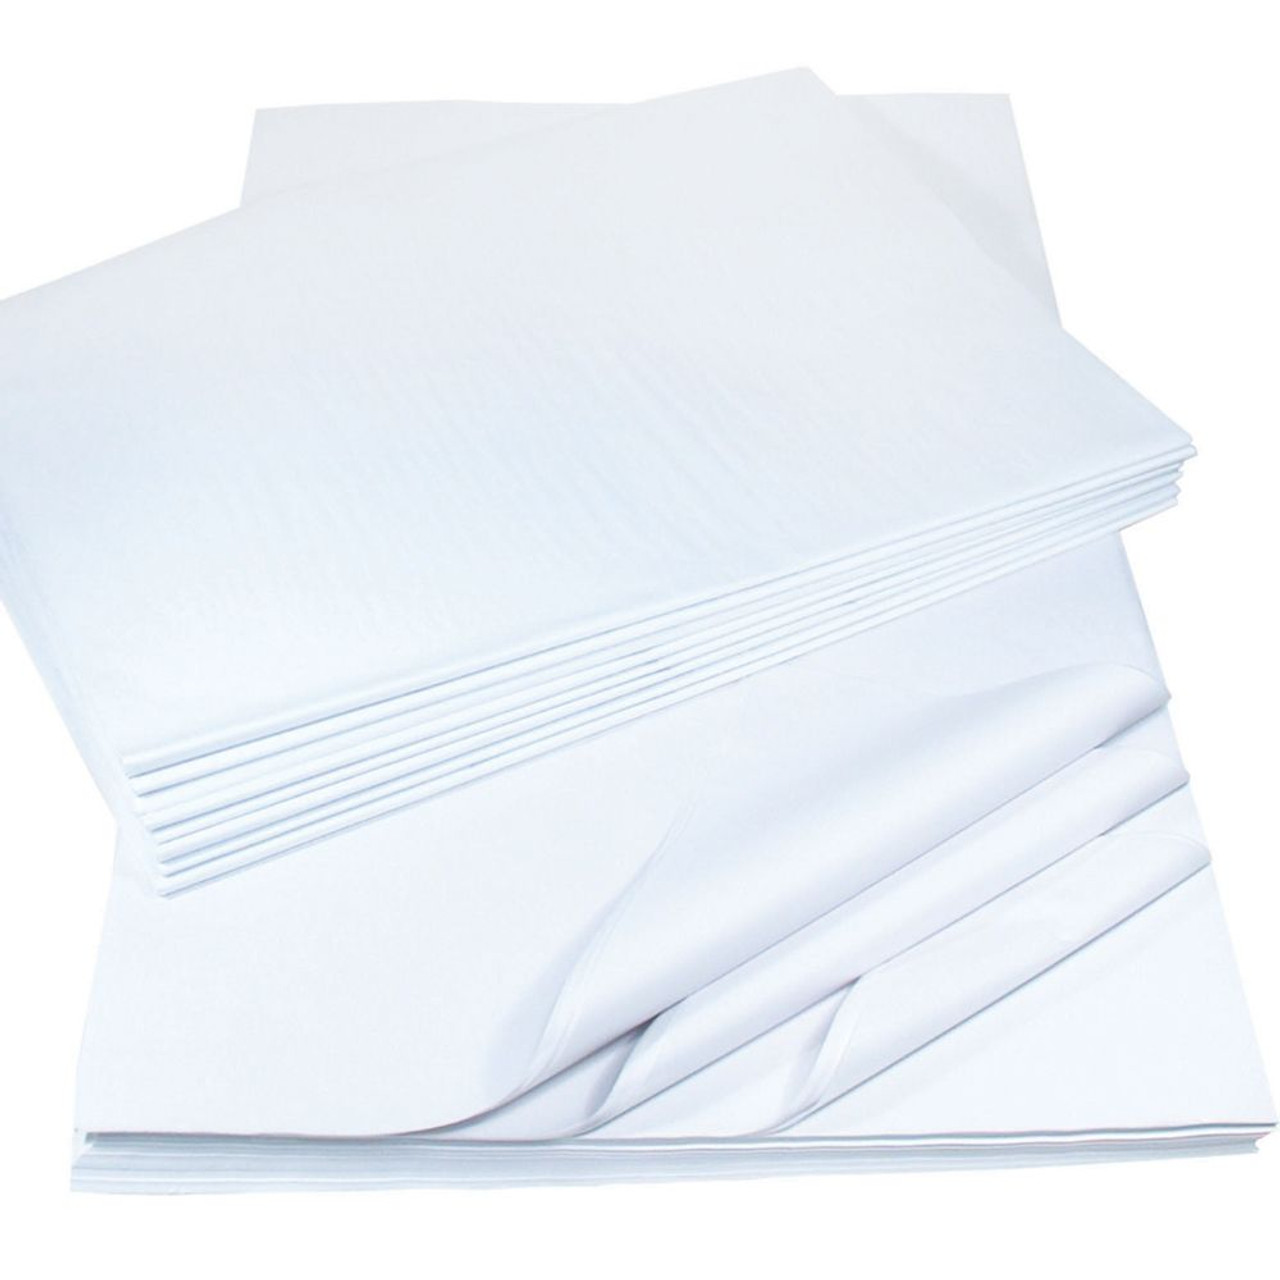 White Recycled Tissue Paper, 18x24 Carton of 5, Bulk 960 Sheet Packs